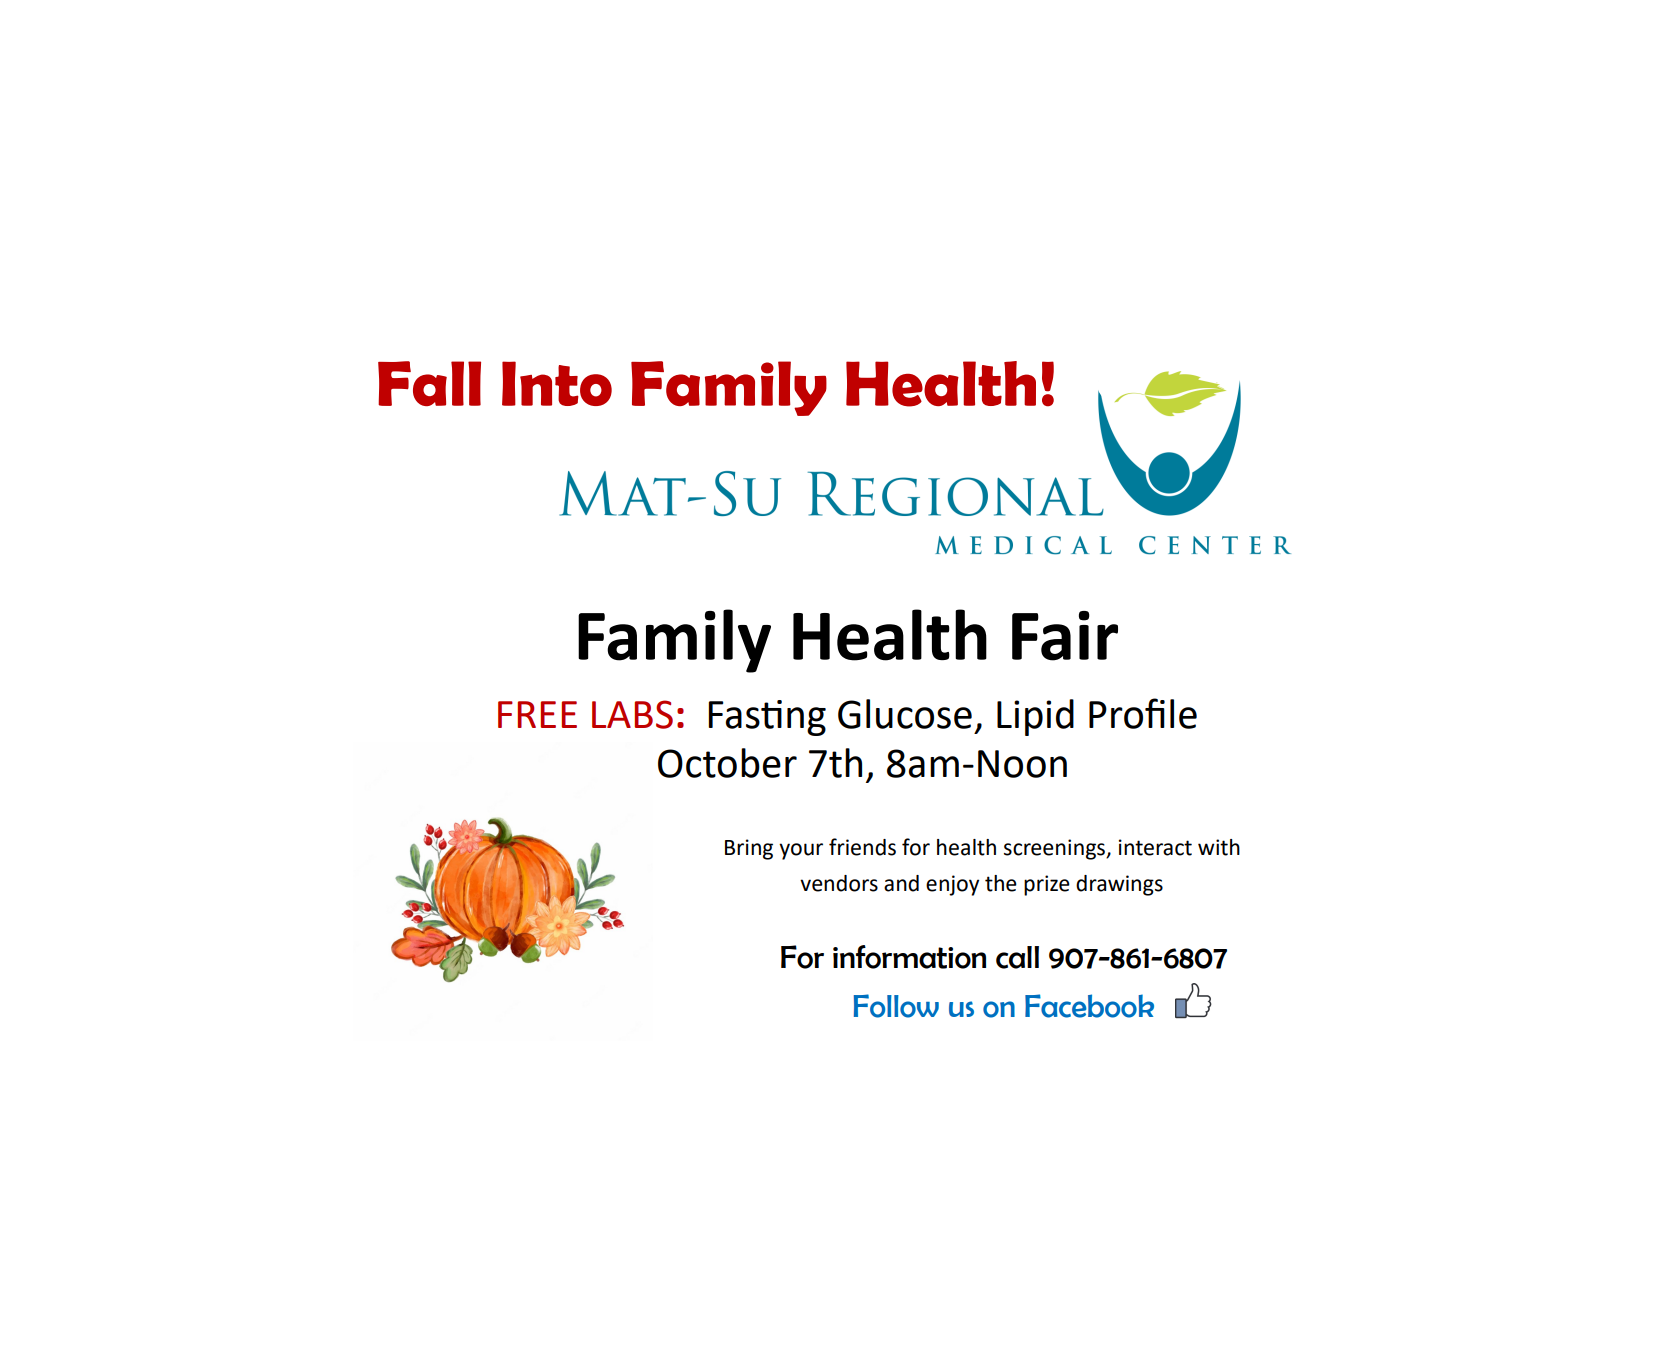 Health Fair flyer hosted by Mat-Su Regional Medical Center.